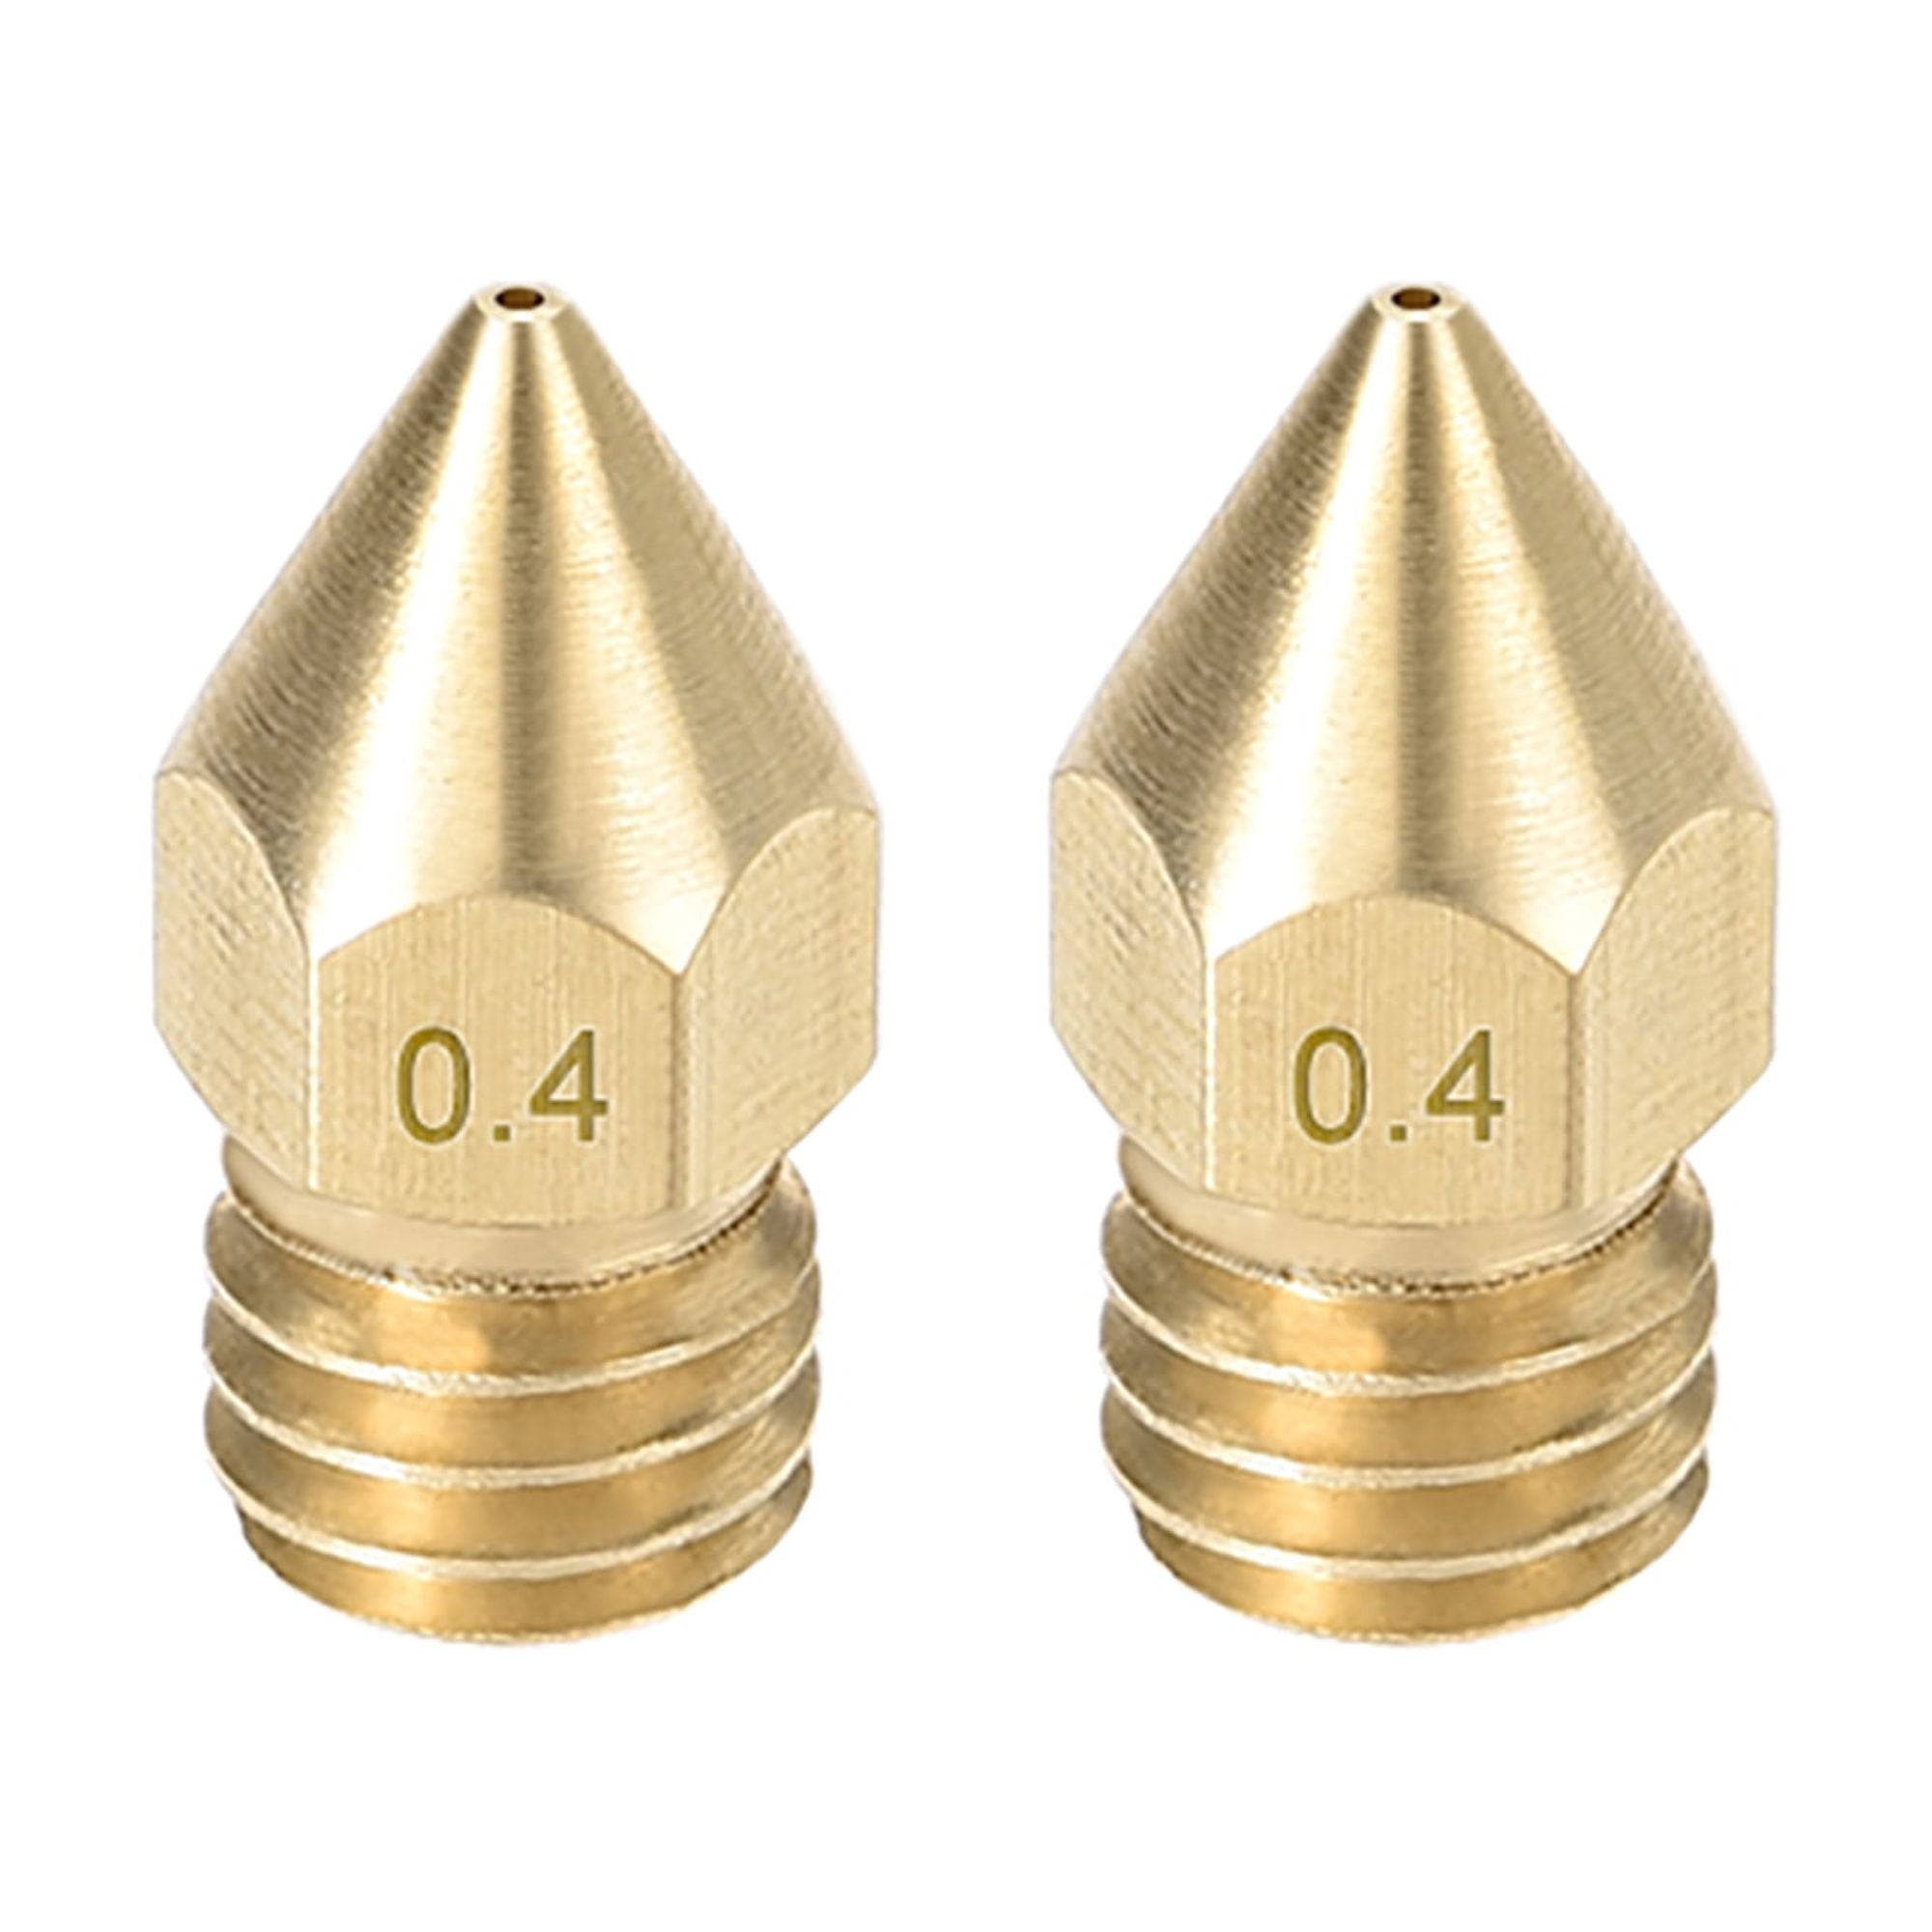 Unique Bargains 0.4mm 3D Printer Nozzle, Fit for MK8 Extruder Head, for 1.75mm Filament Brass 2pcs